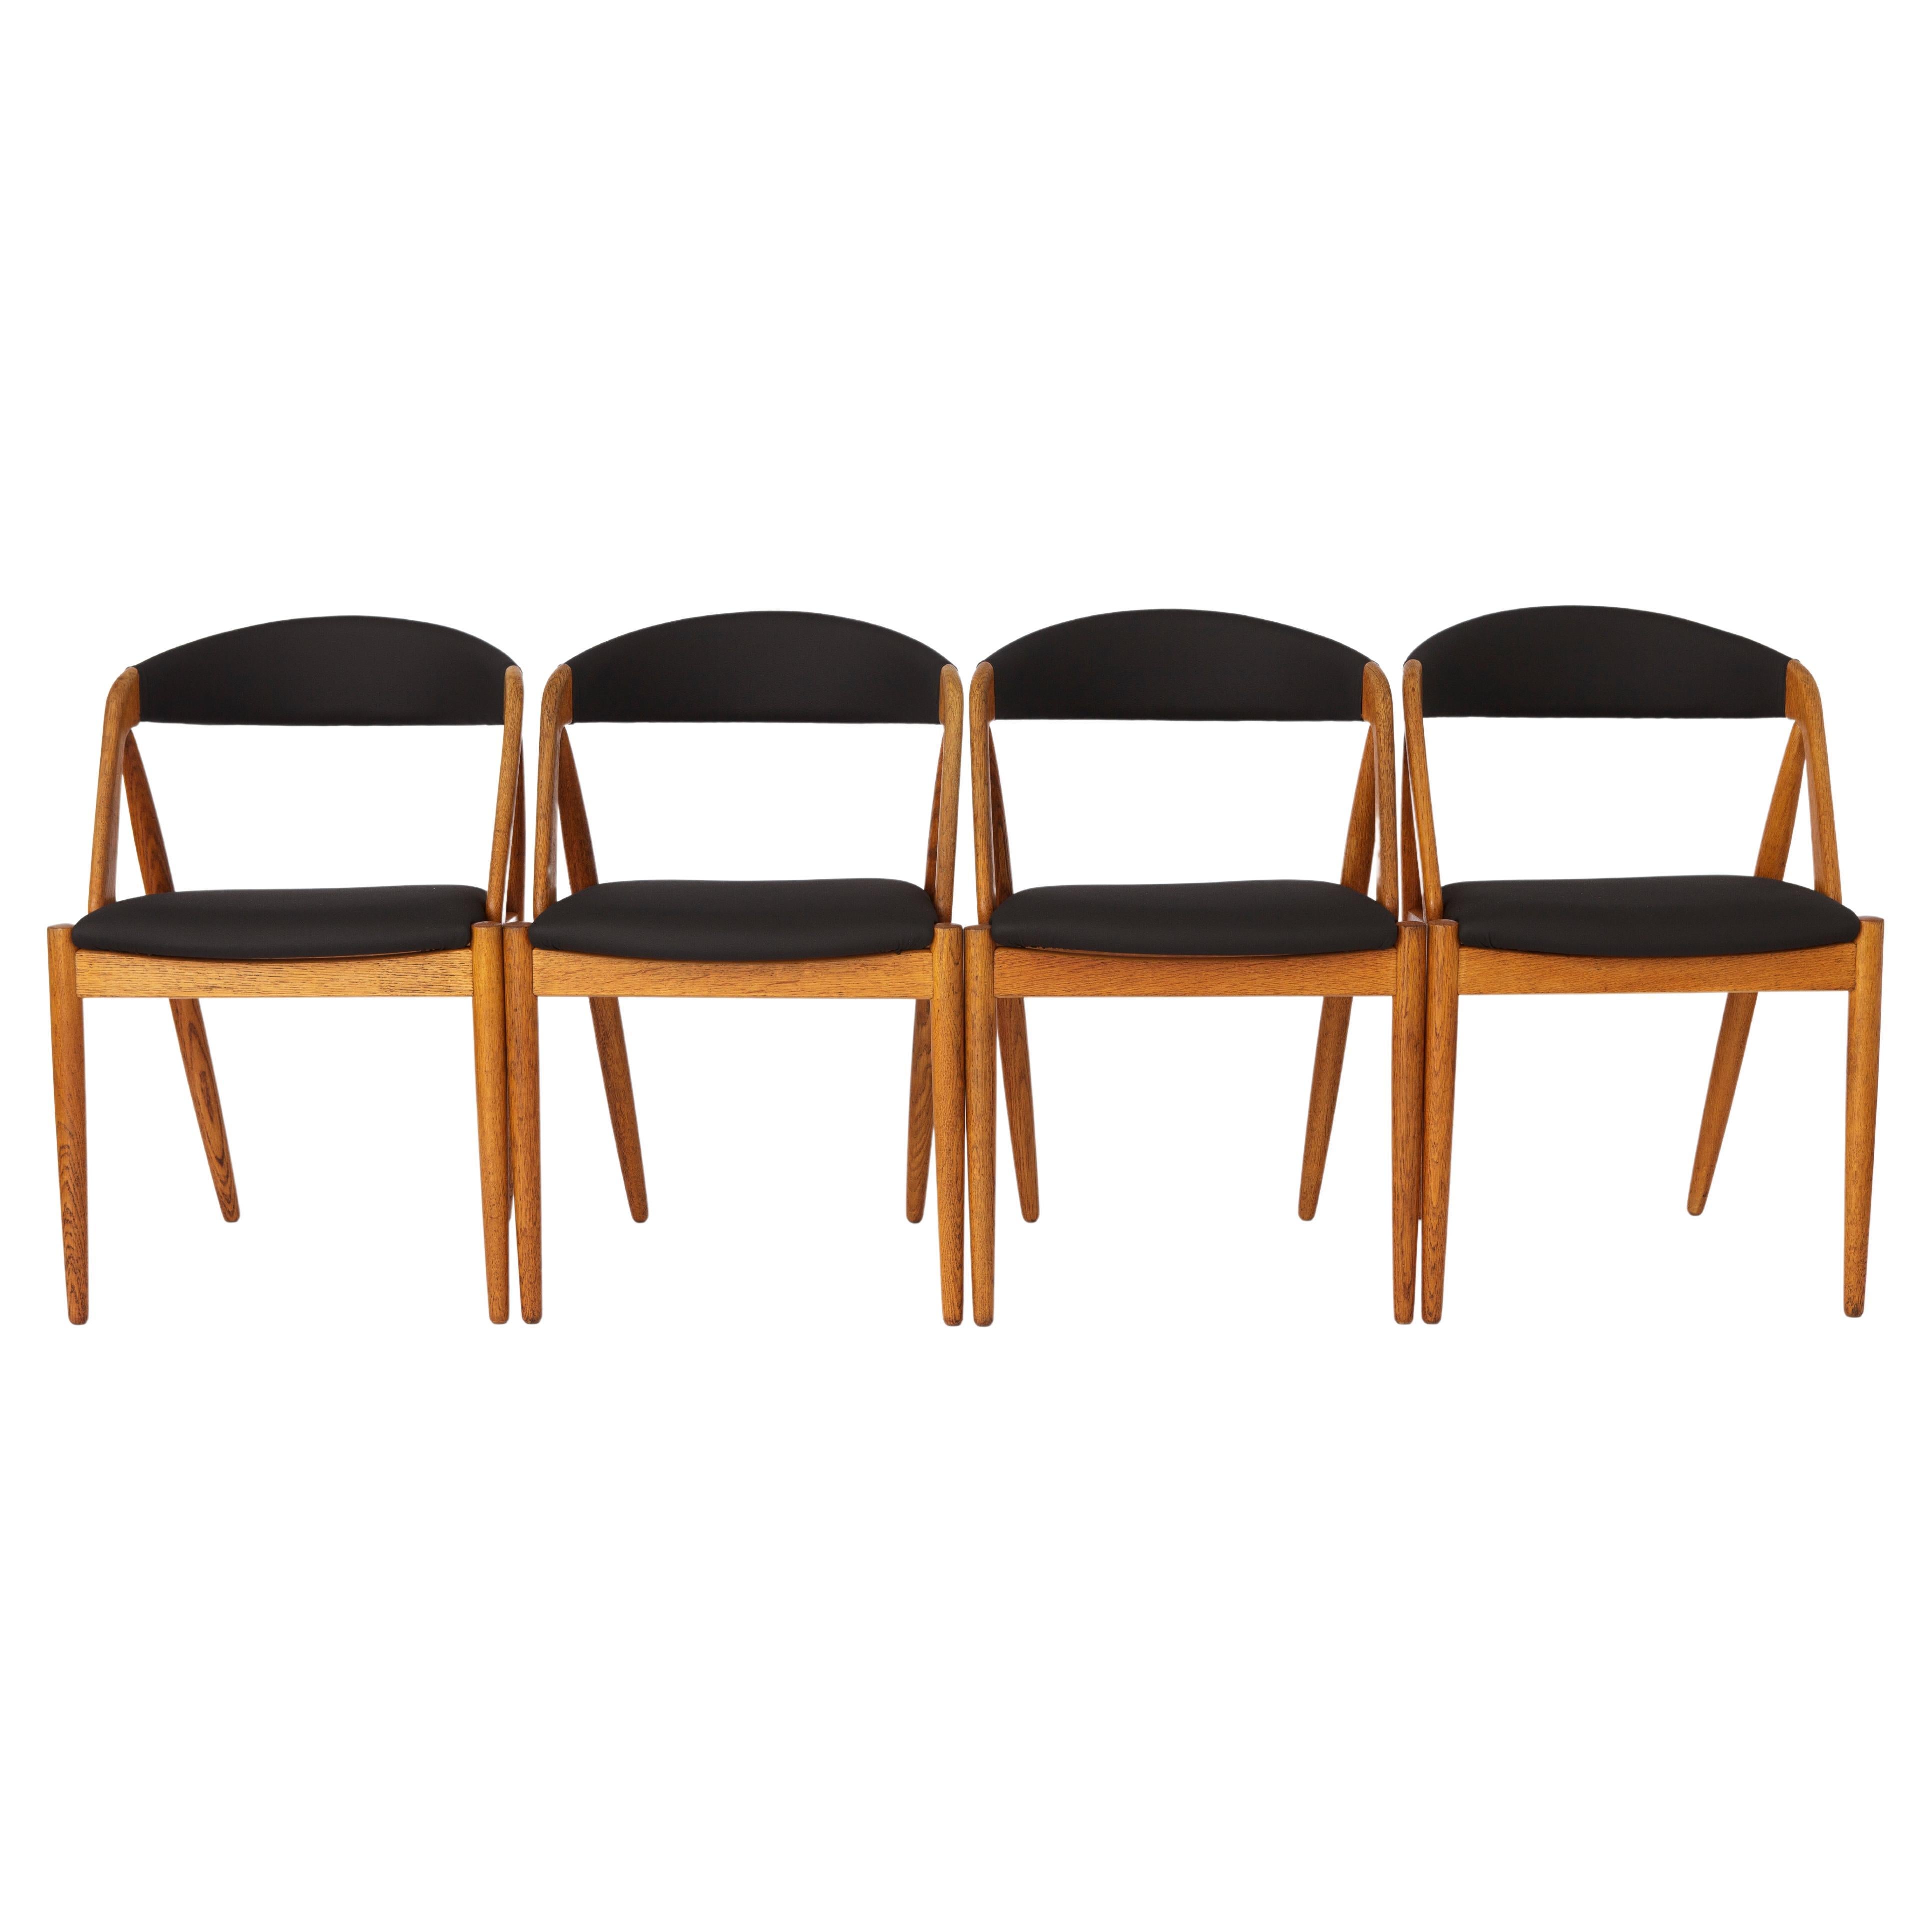 4 Kai Kristiansen Chairs 1960s - Model 31, Vintage Oak